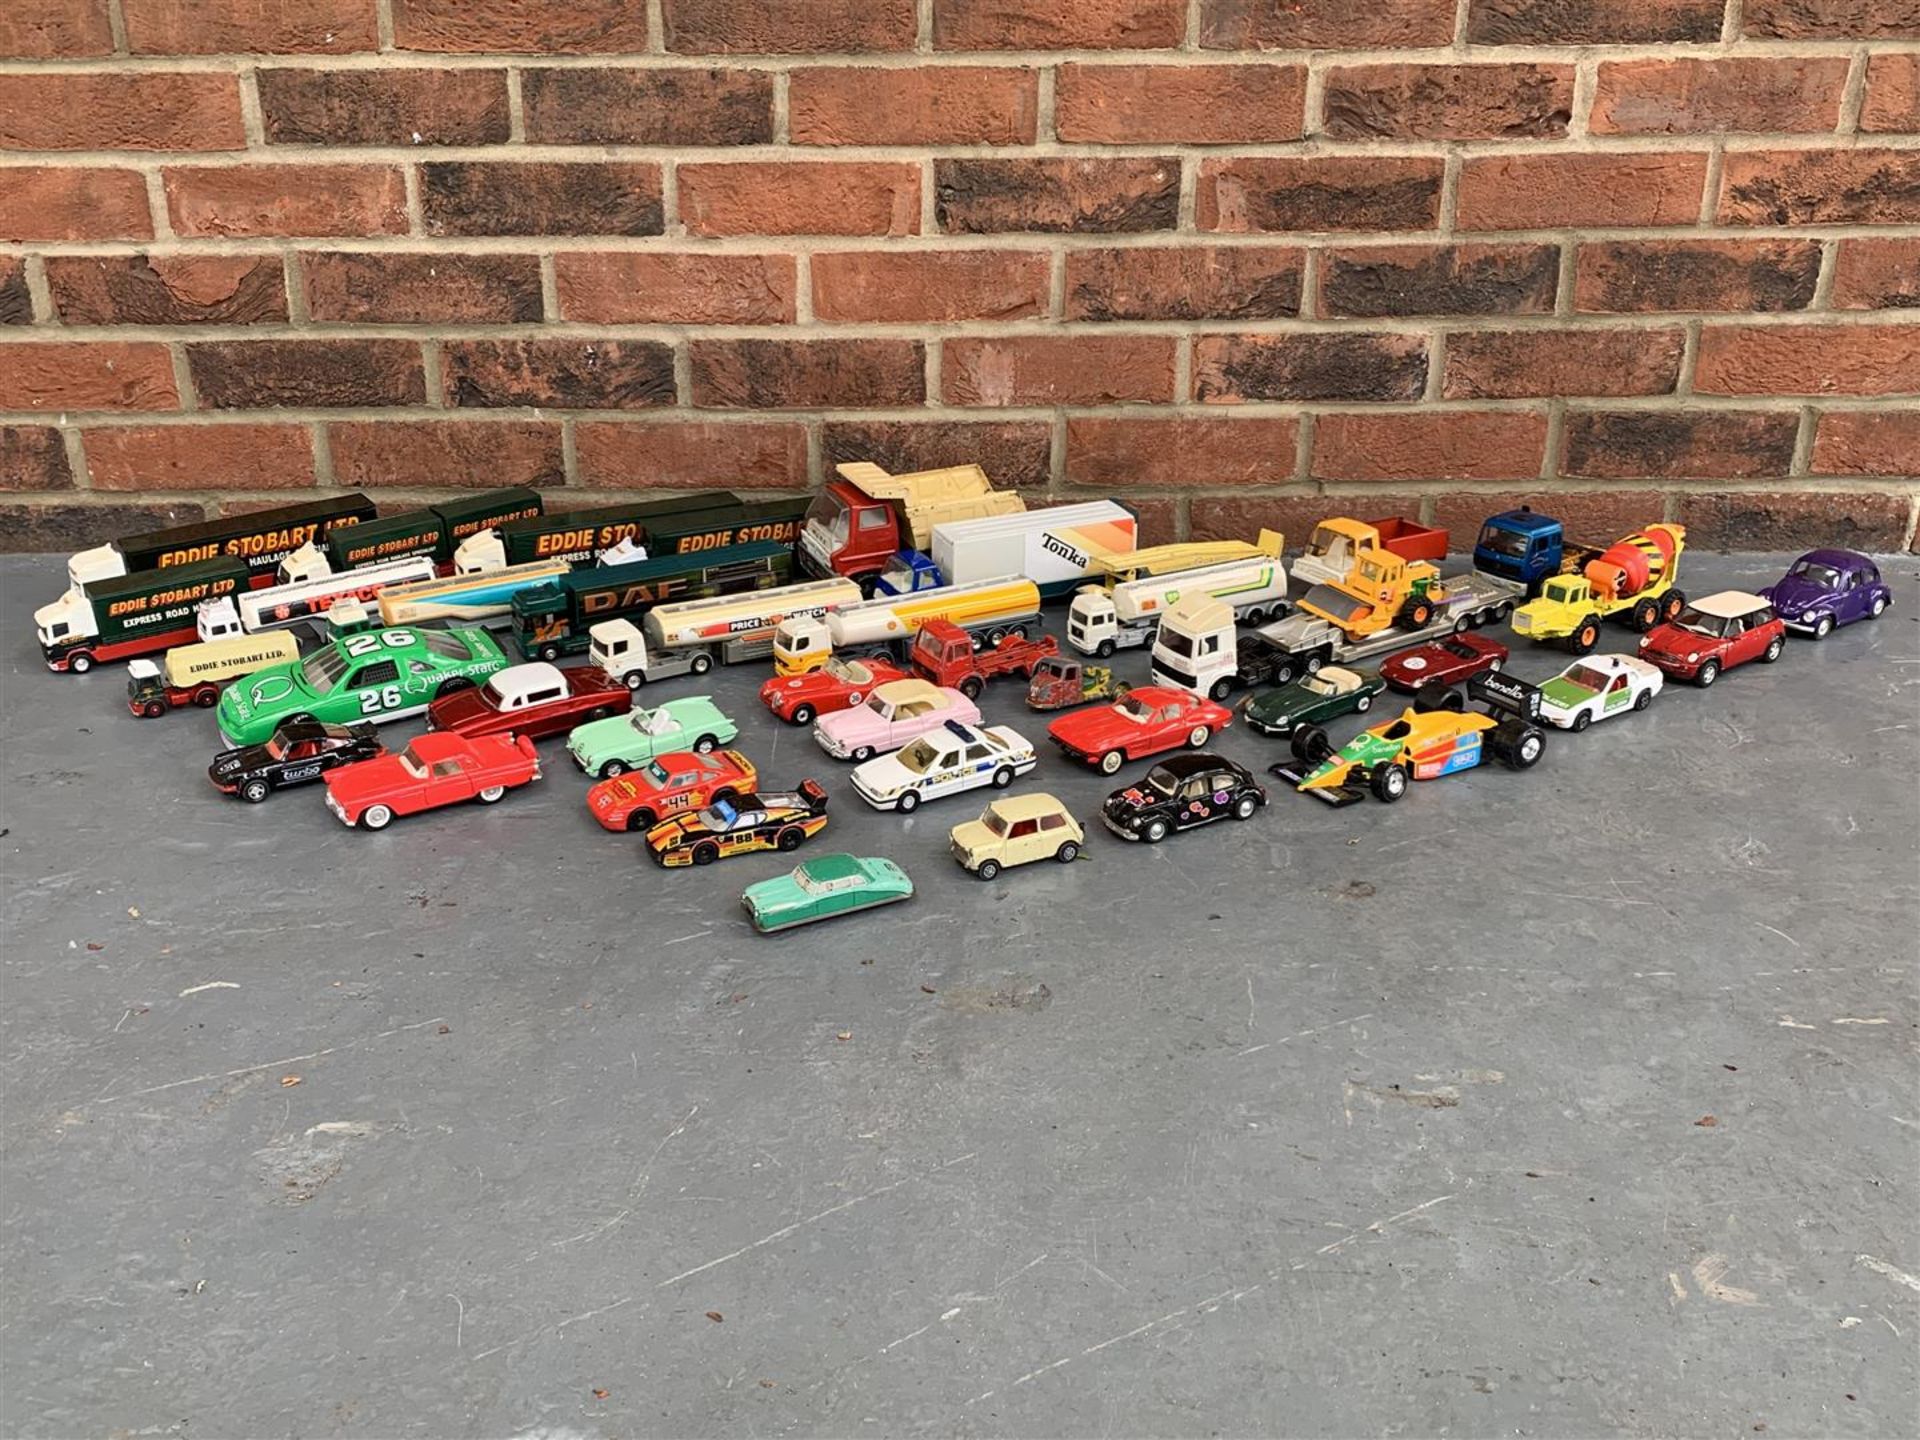 Quantity Of Play Worn Die Cast Toy Cars/Lorries